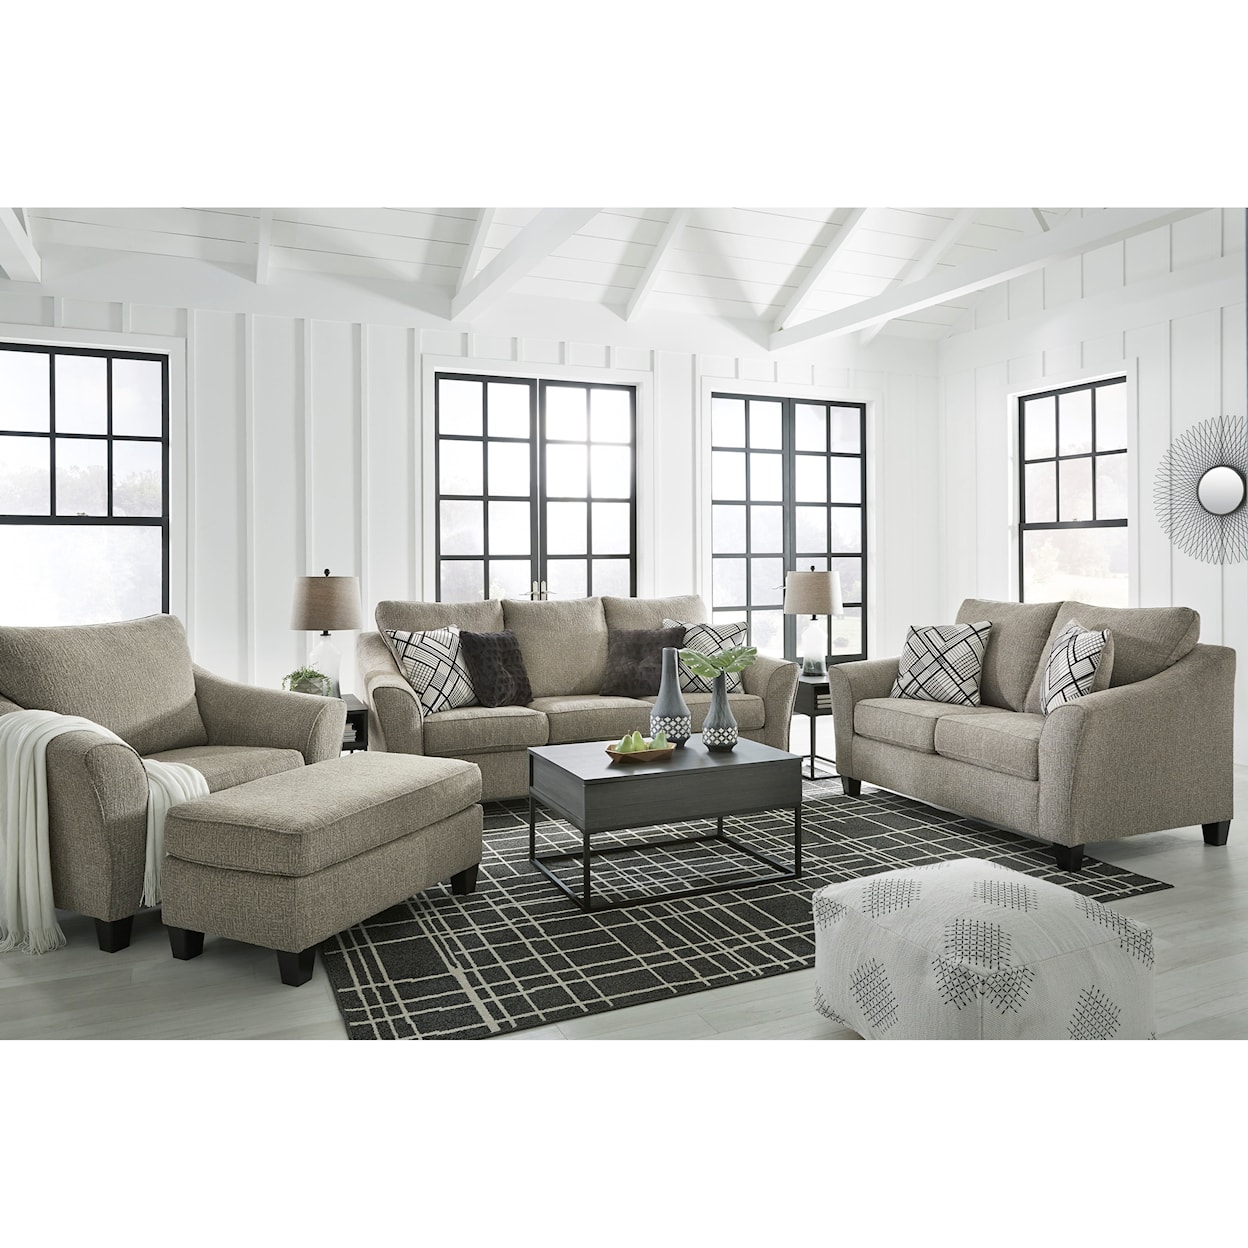 Ashley Furniture Benchcraft Barnesley Living Room Group